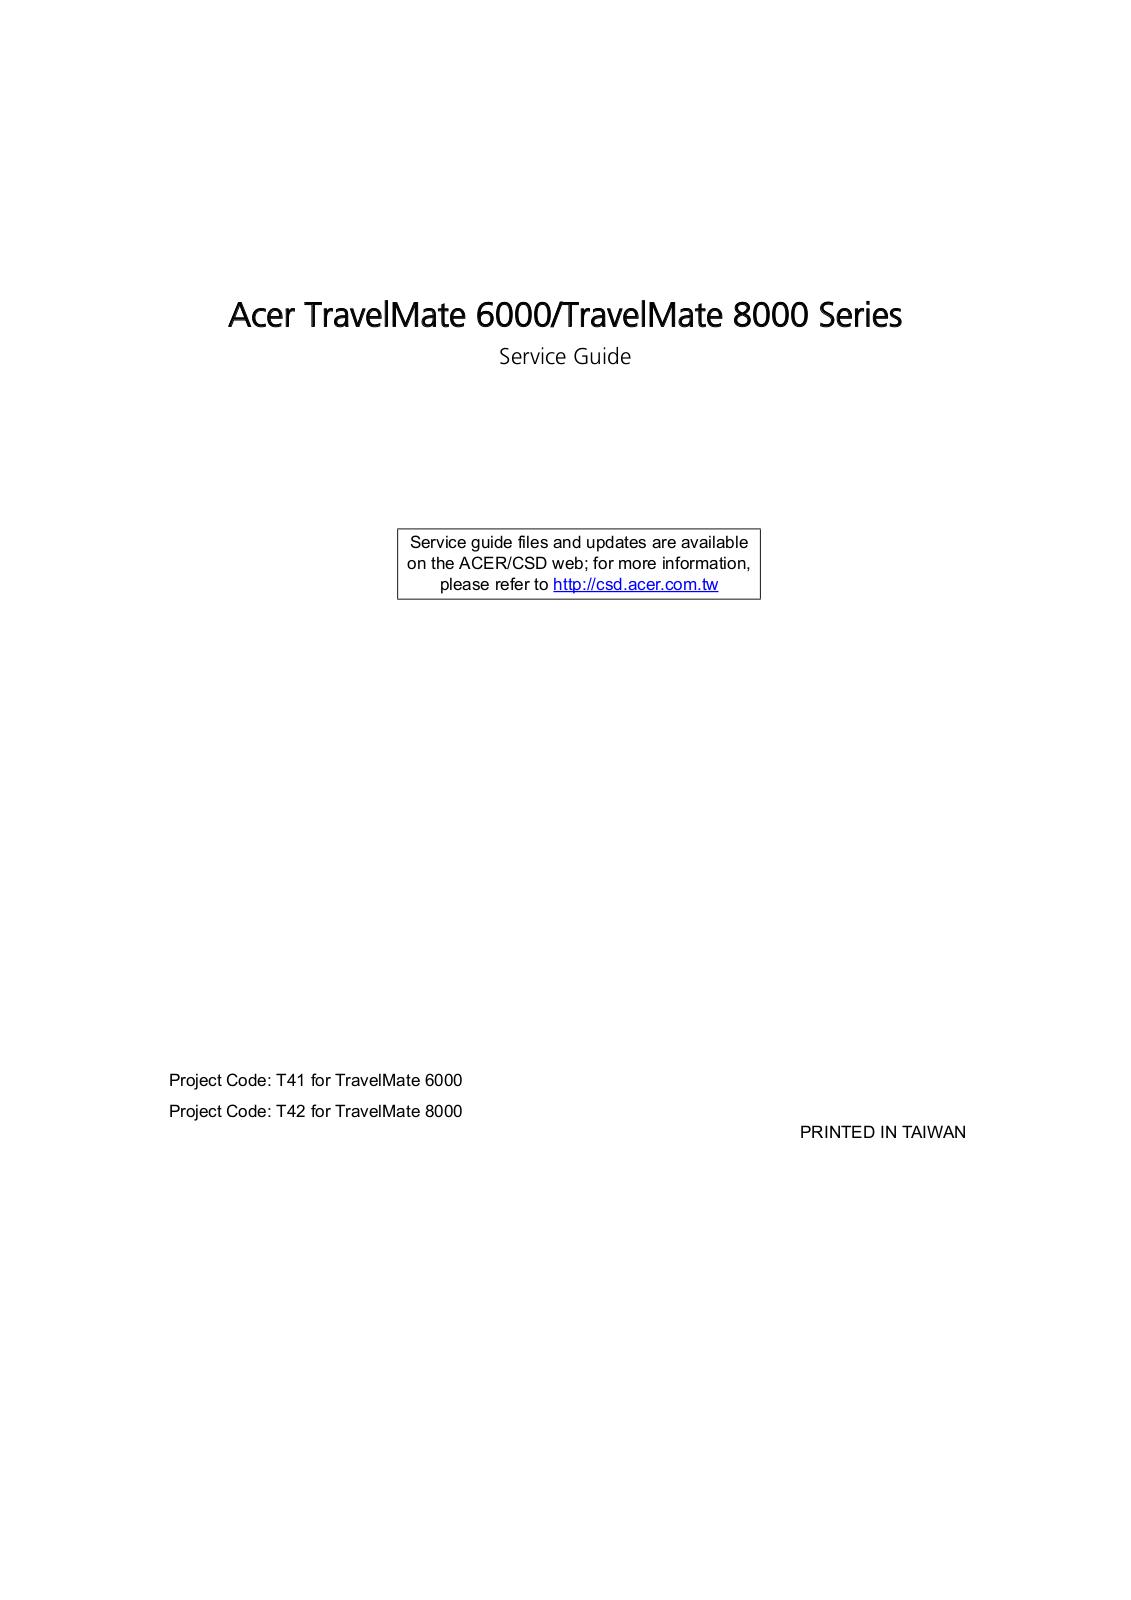 Acer TM6000, TM 8000 SERVICE GUIDE